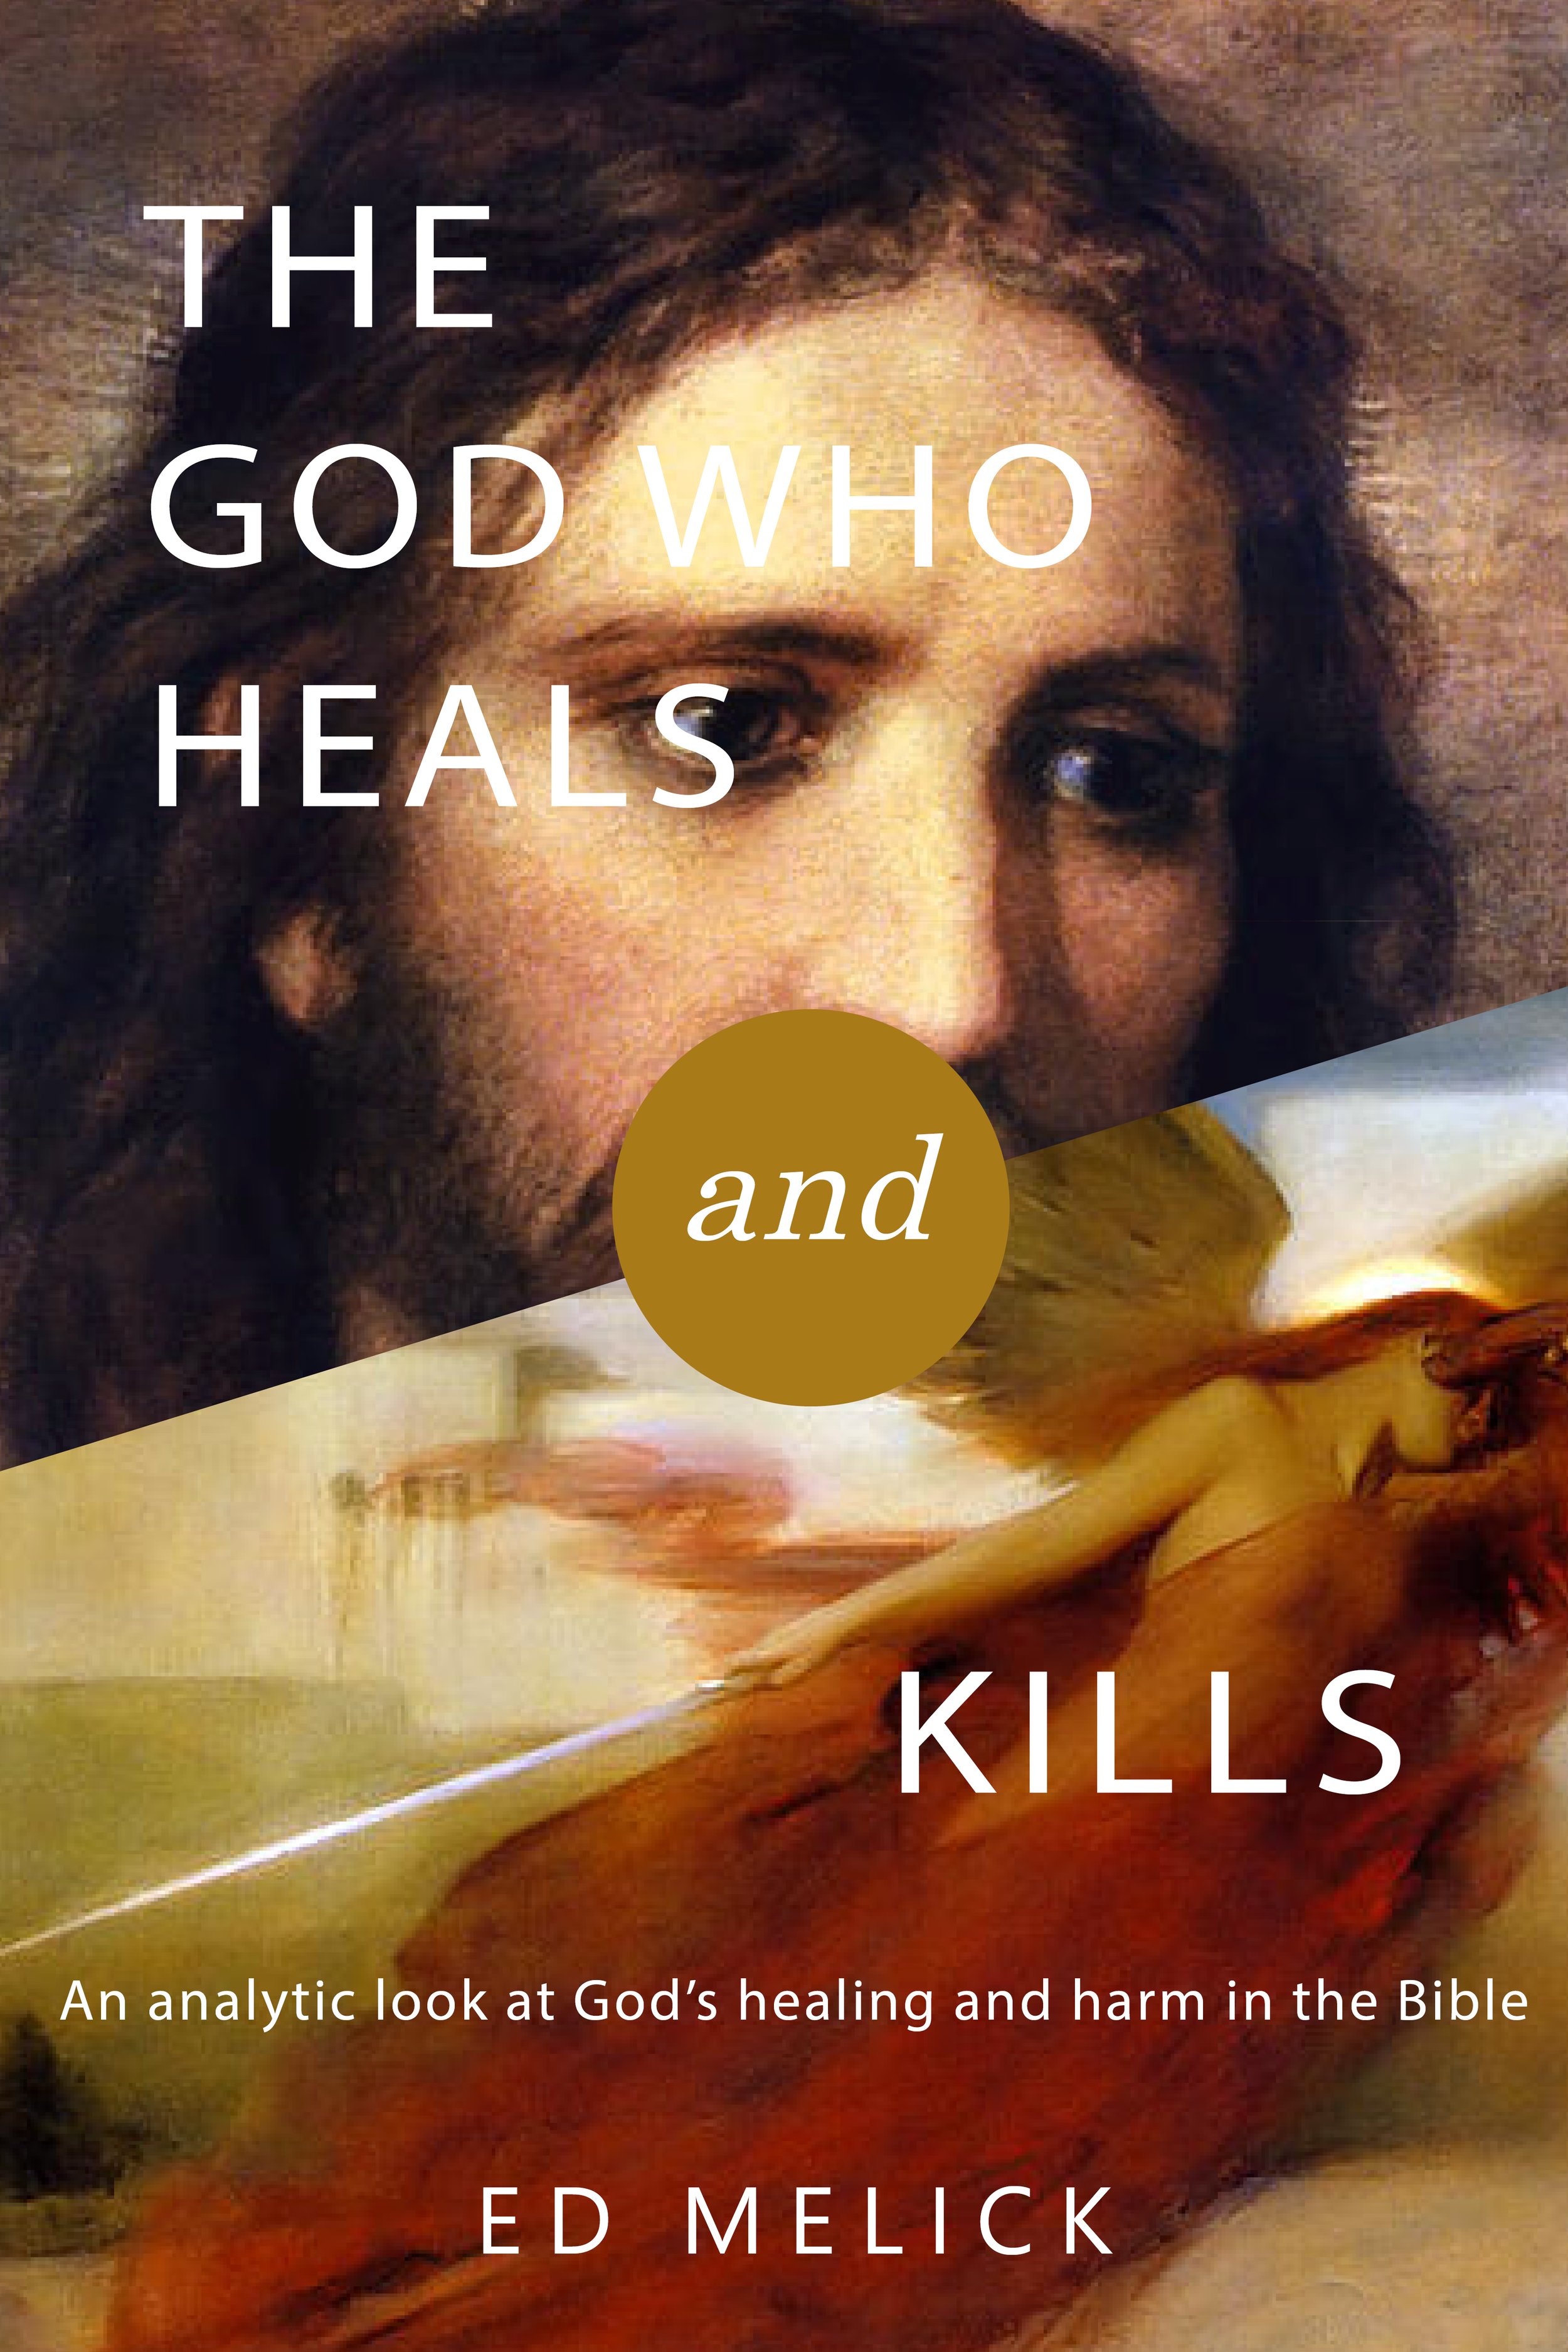 2023_0120 The God Who Heals and Kills v2 - Darker Heal Image.jpg